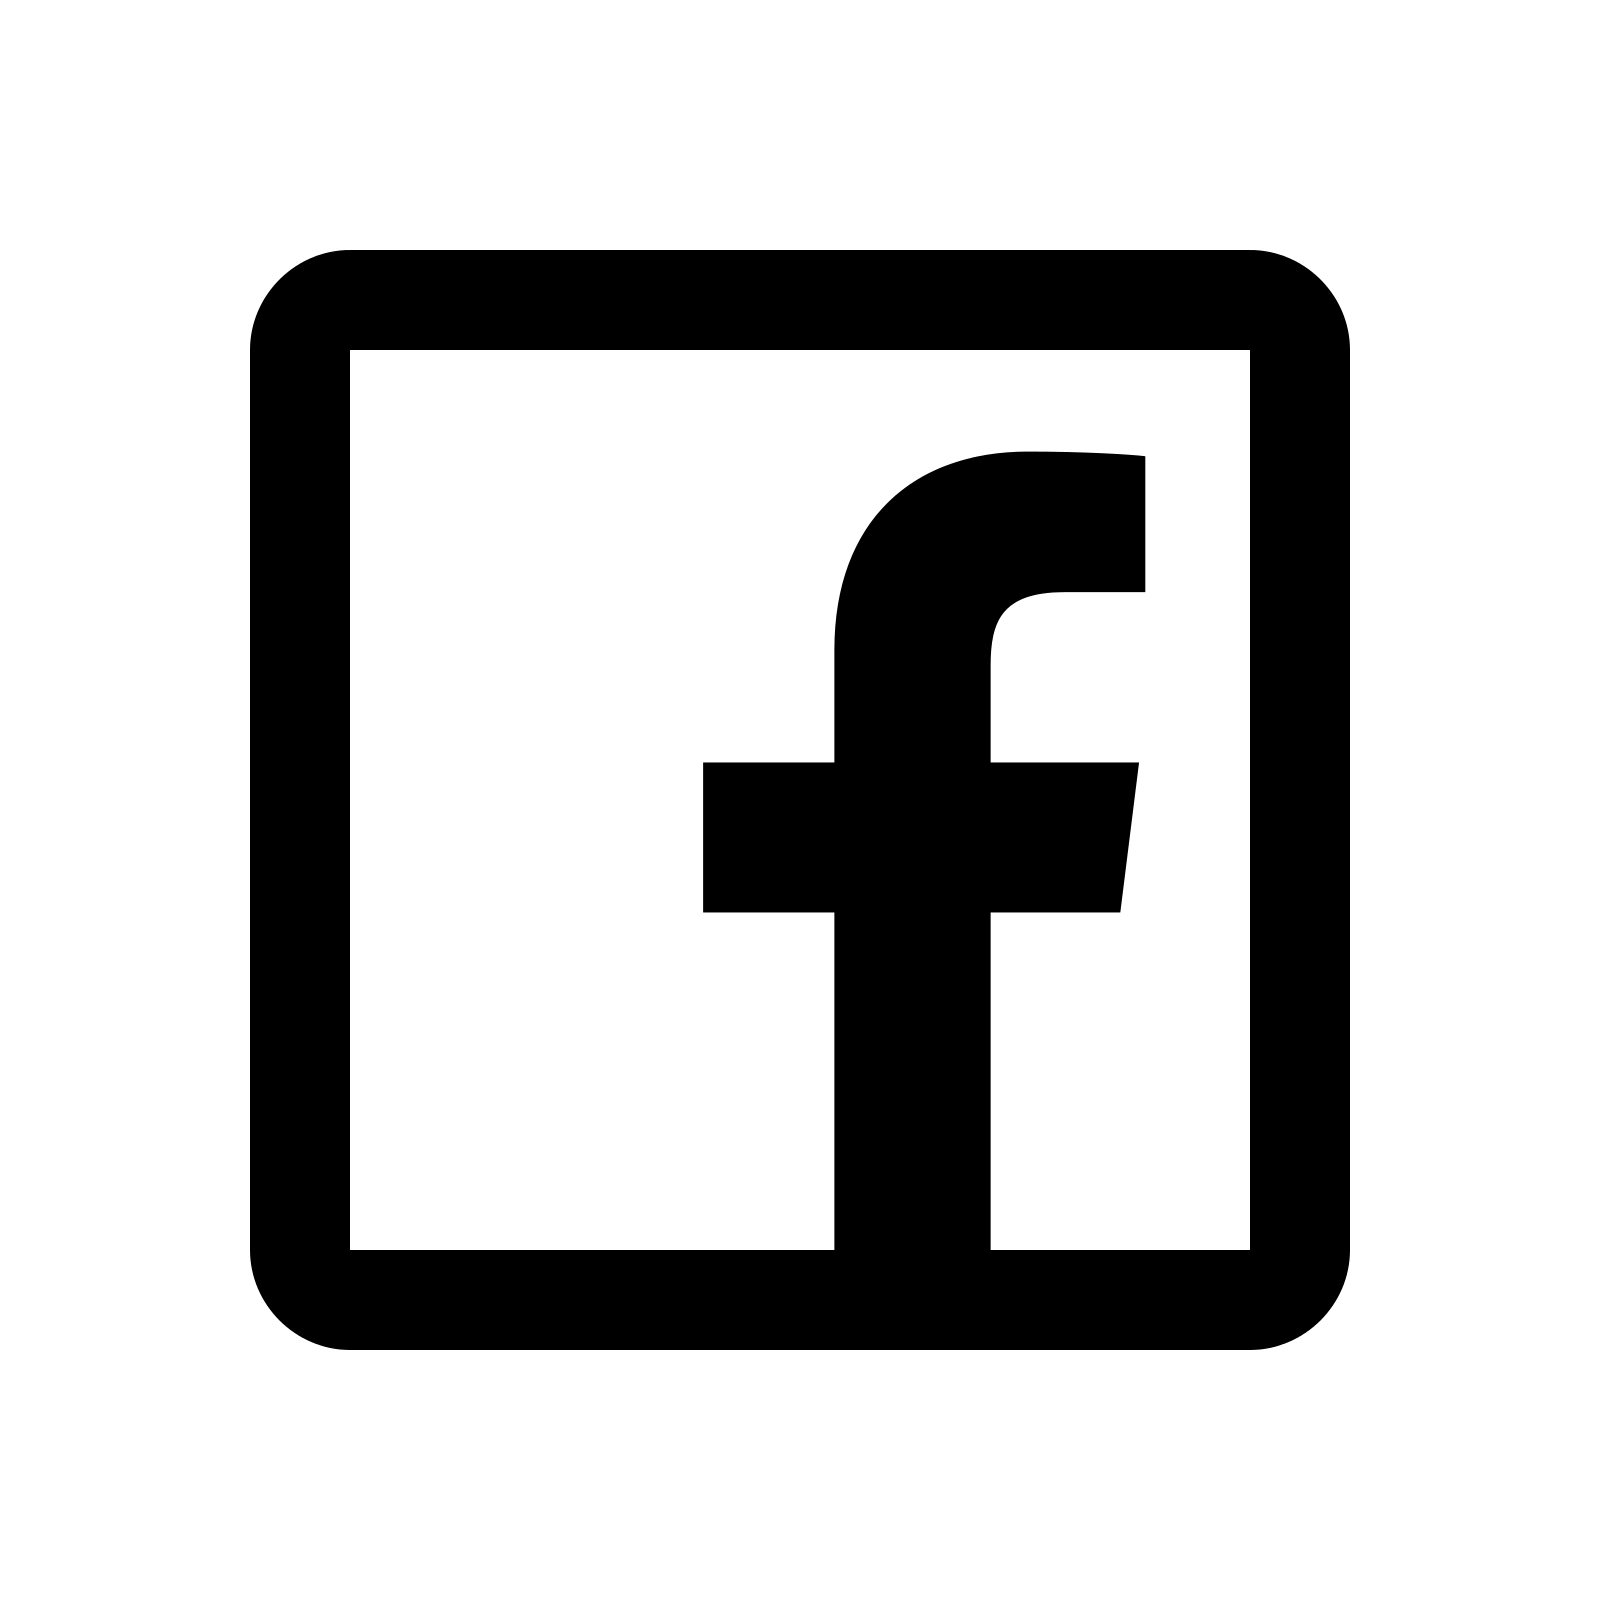 Facebook Computer Icons Logo - facebook icon png download - 1600*1600